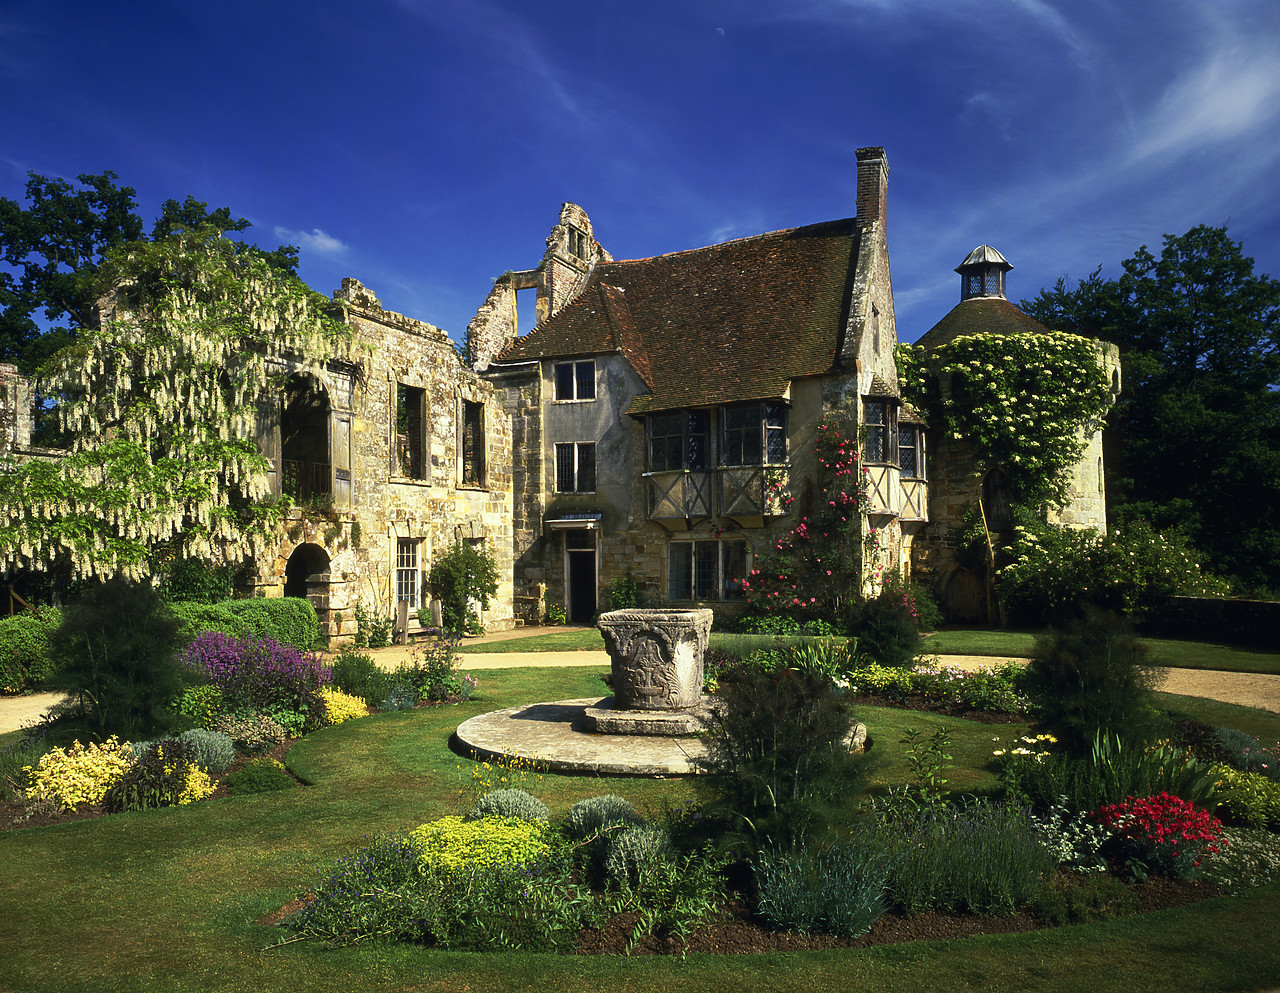 #892239-2 - Scotney Castle, Lamberhurst, Kent, England